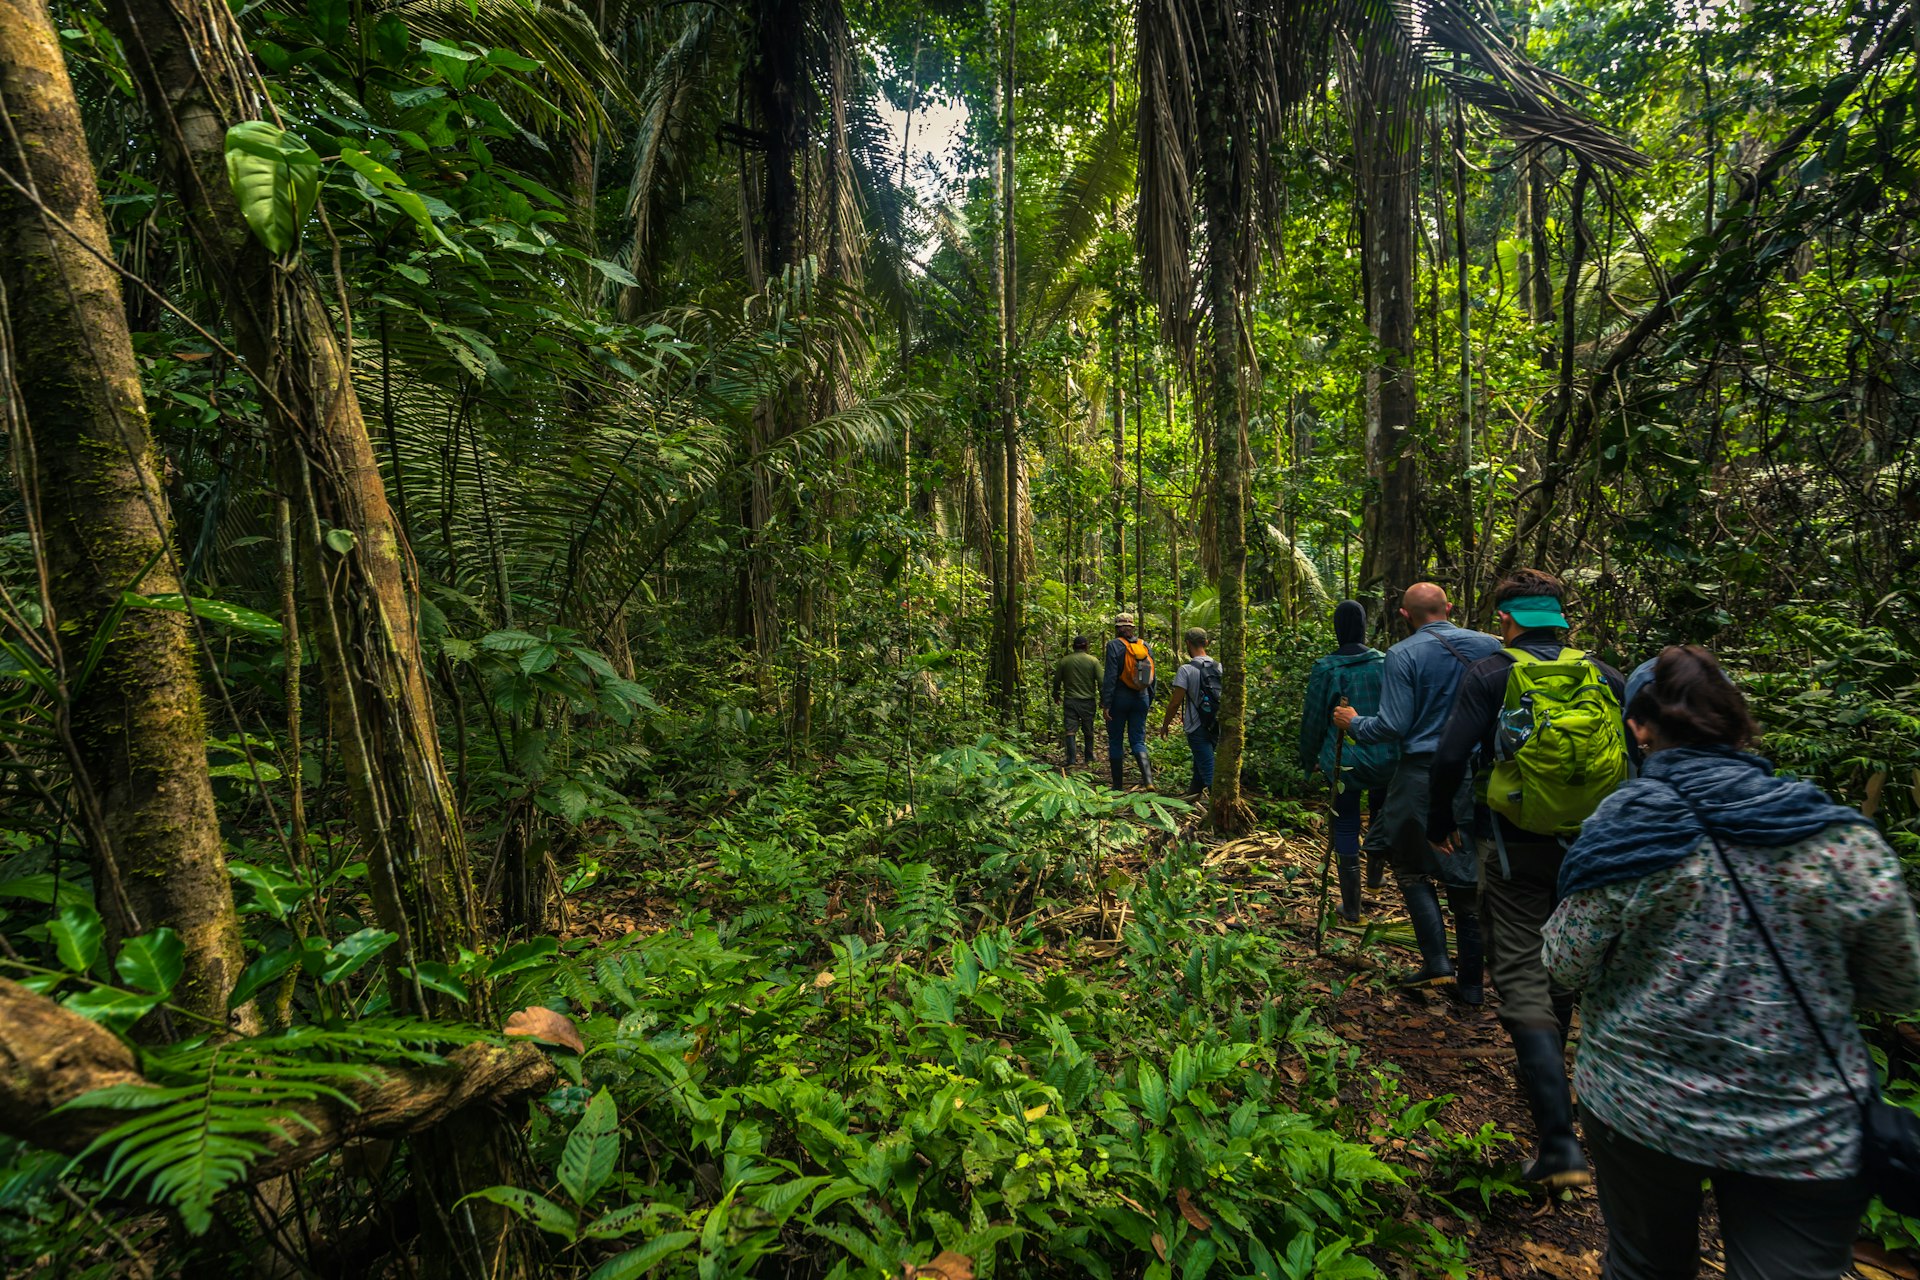 Hikers walk through dense green foliage in Manu National Park in Peru